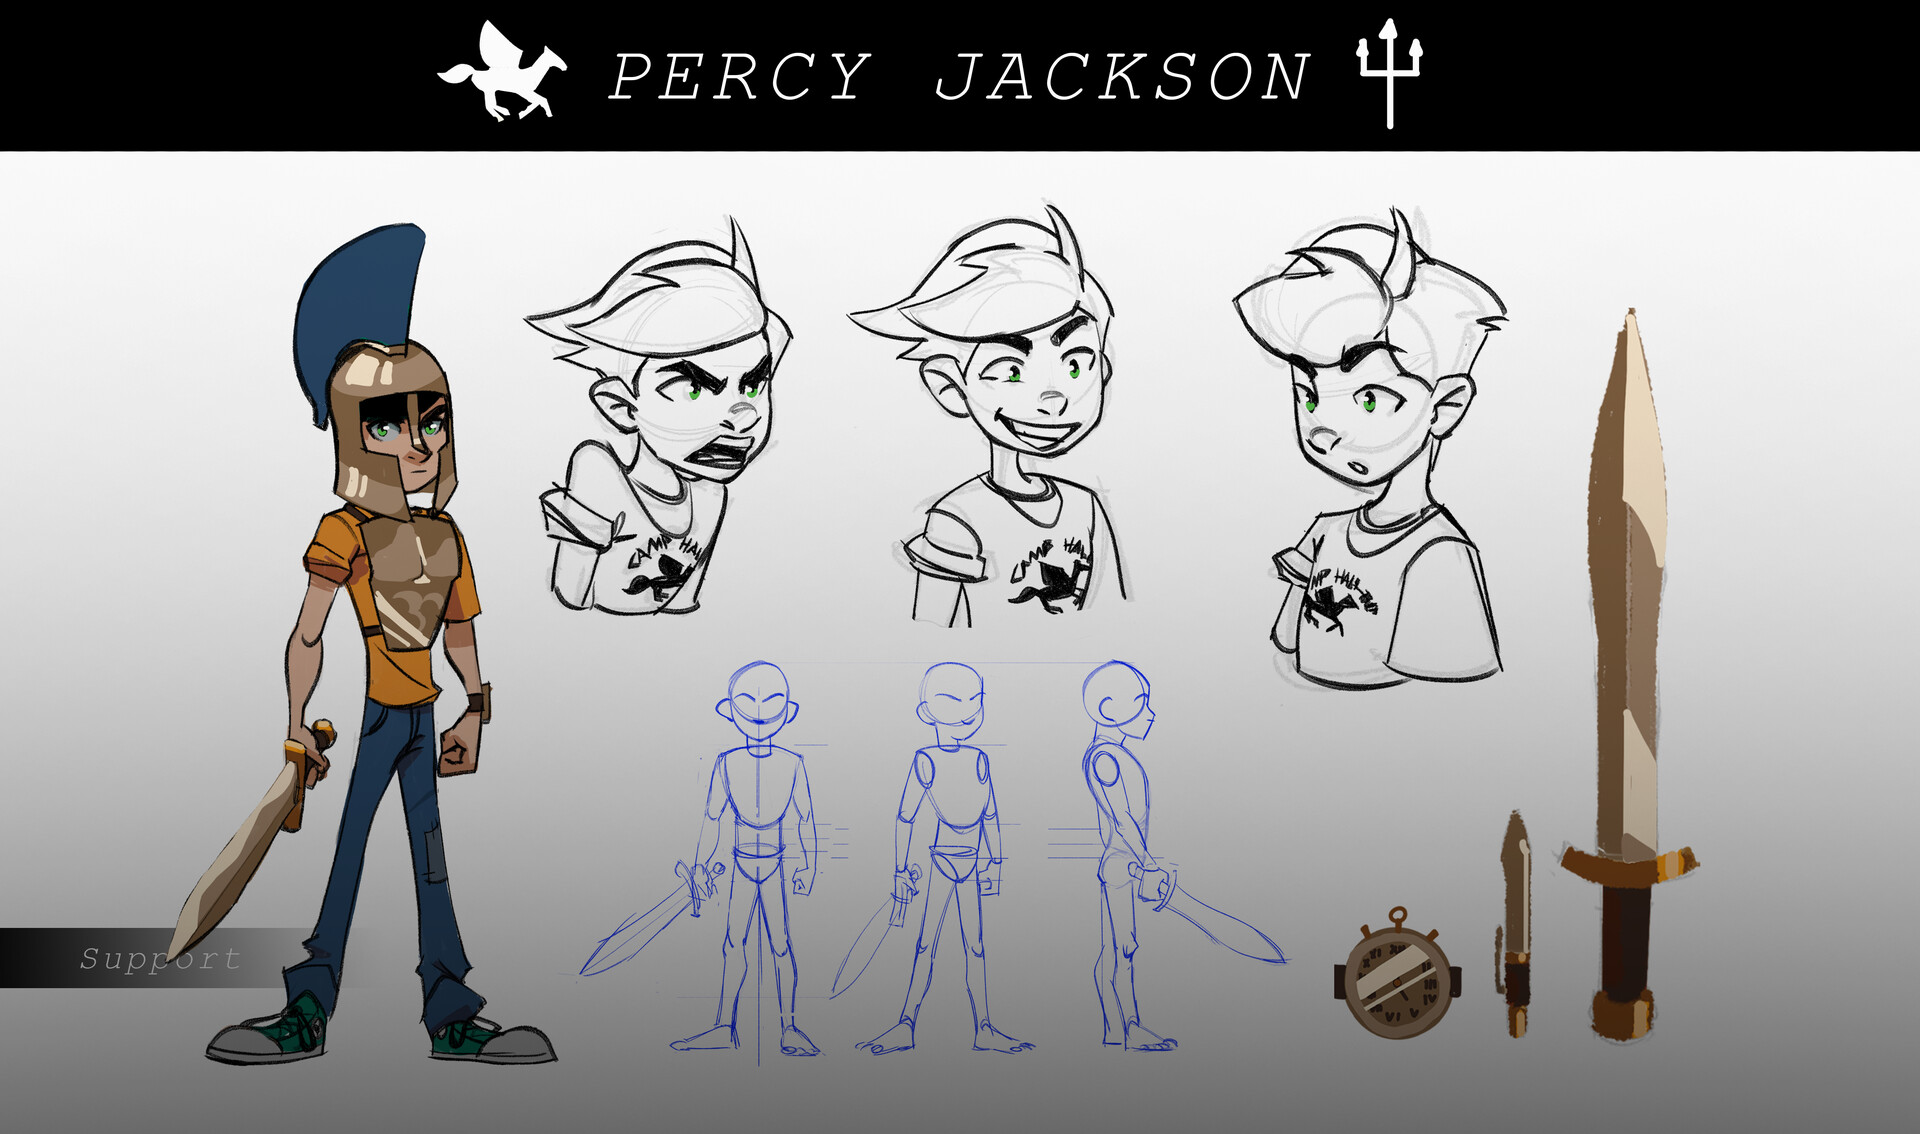 ArtStation - Percy Jackson Animation